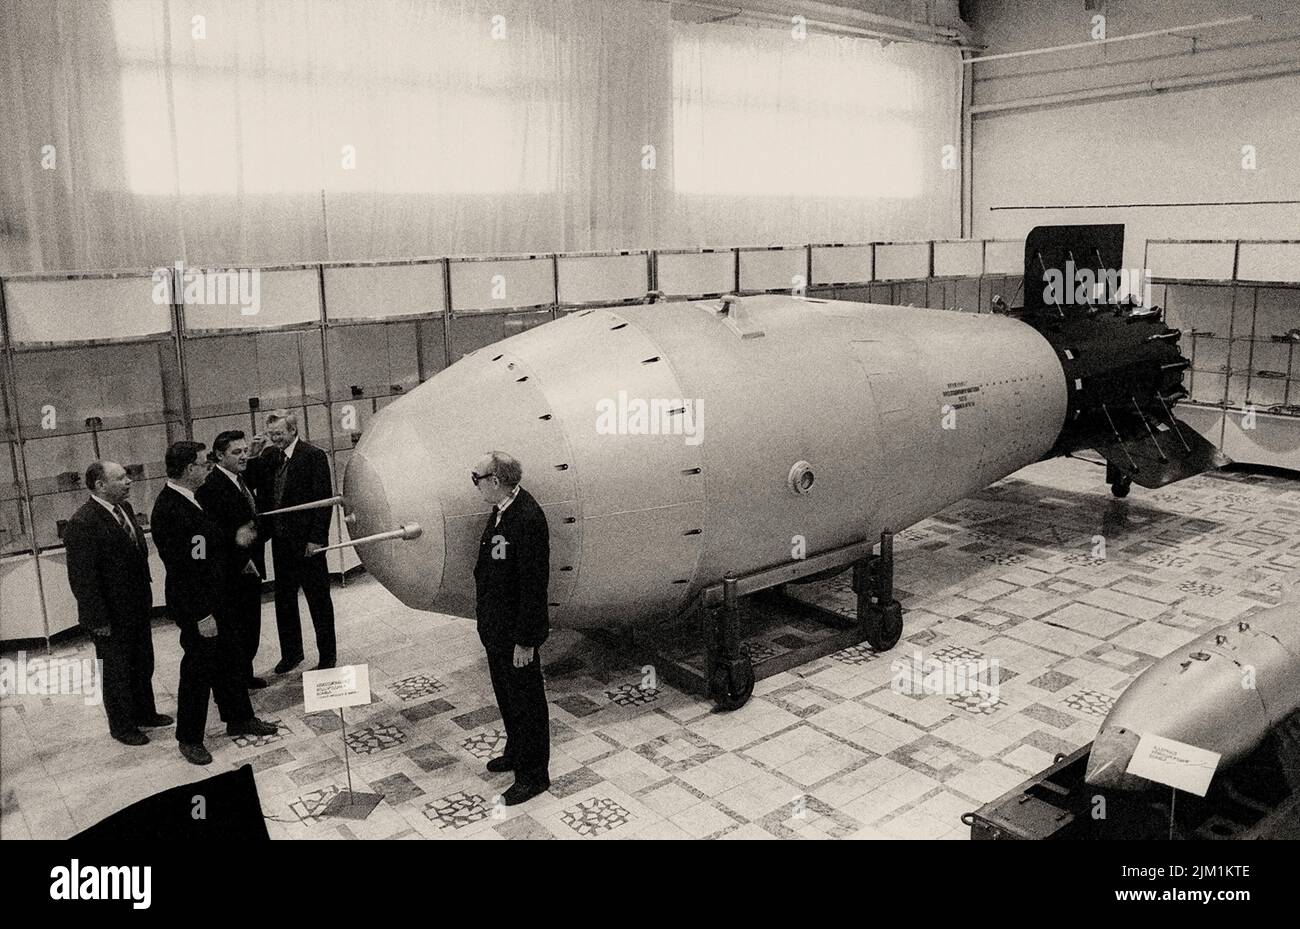 Рдс водородная бомба. Ан602 термоядерная бомба — «царь-бомба» (58,6 мегатонн). Водородная бомба Сахарова 1953. Царь бомба 100 мегатонн.